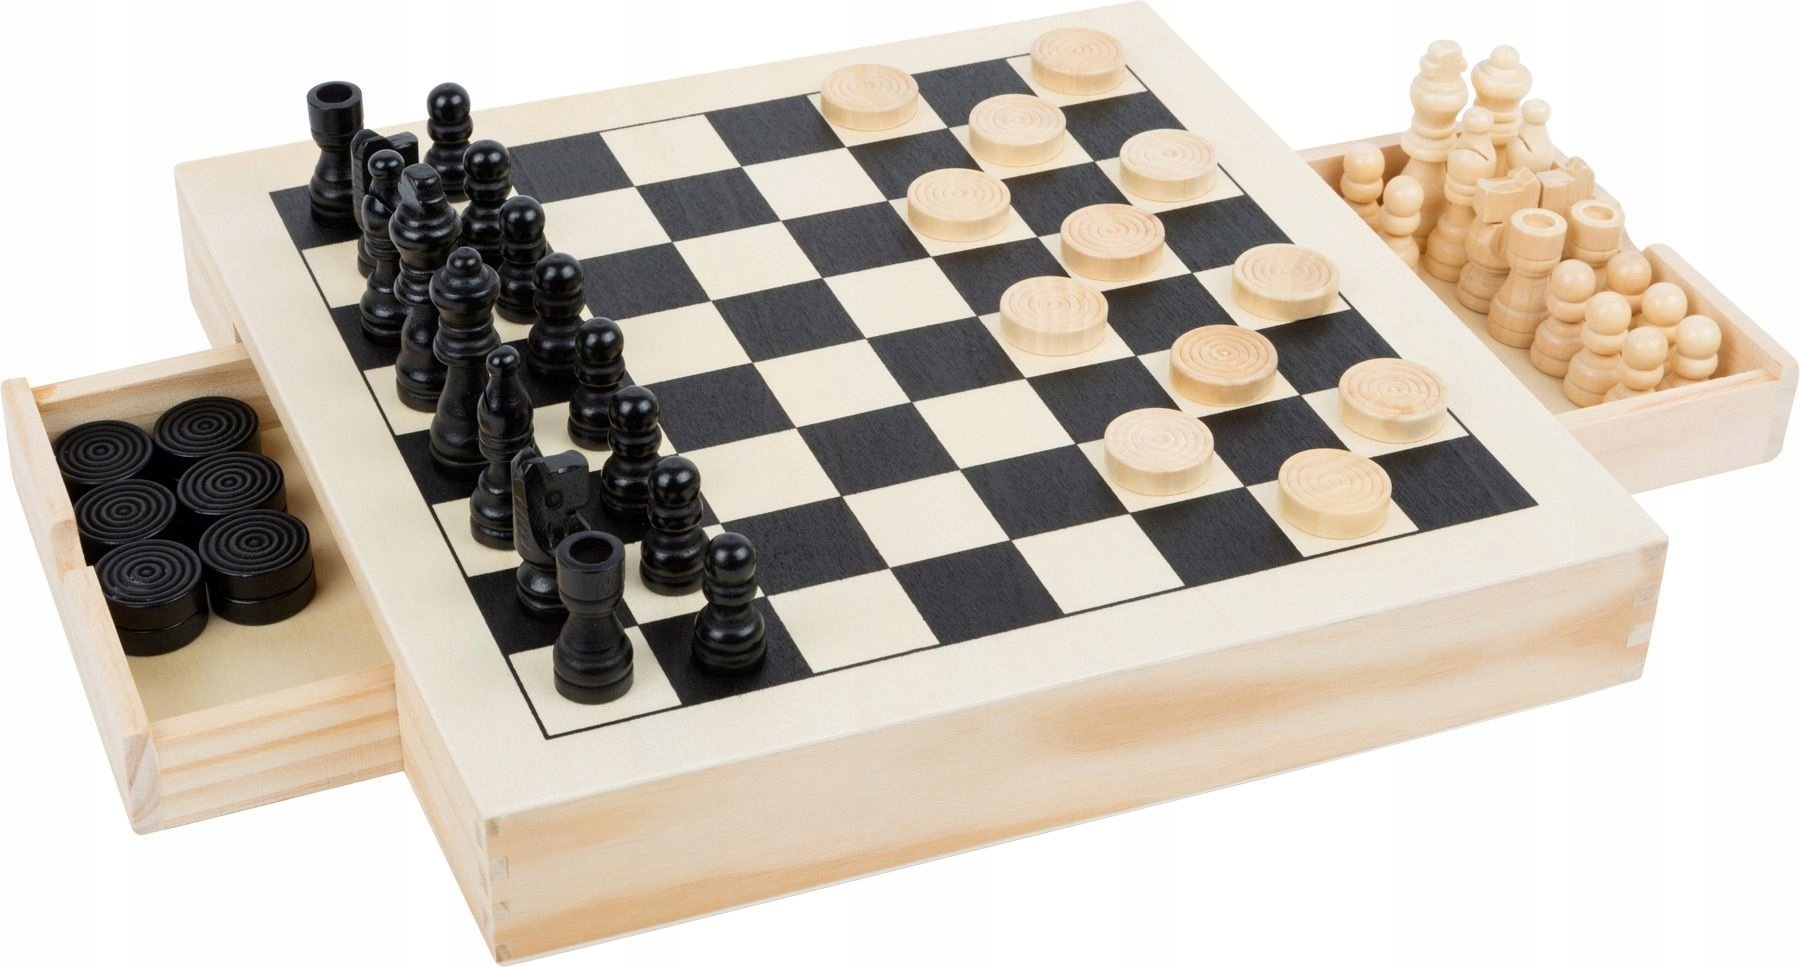 Разбитые шашки. Шахматы и шашки. Шахматный набор. Шахматы-шашки деревянные. Шашки деревянные.